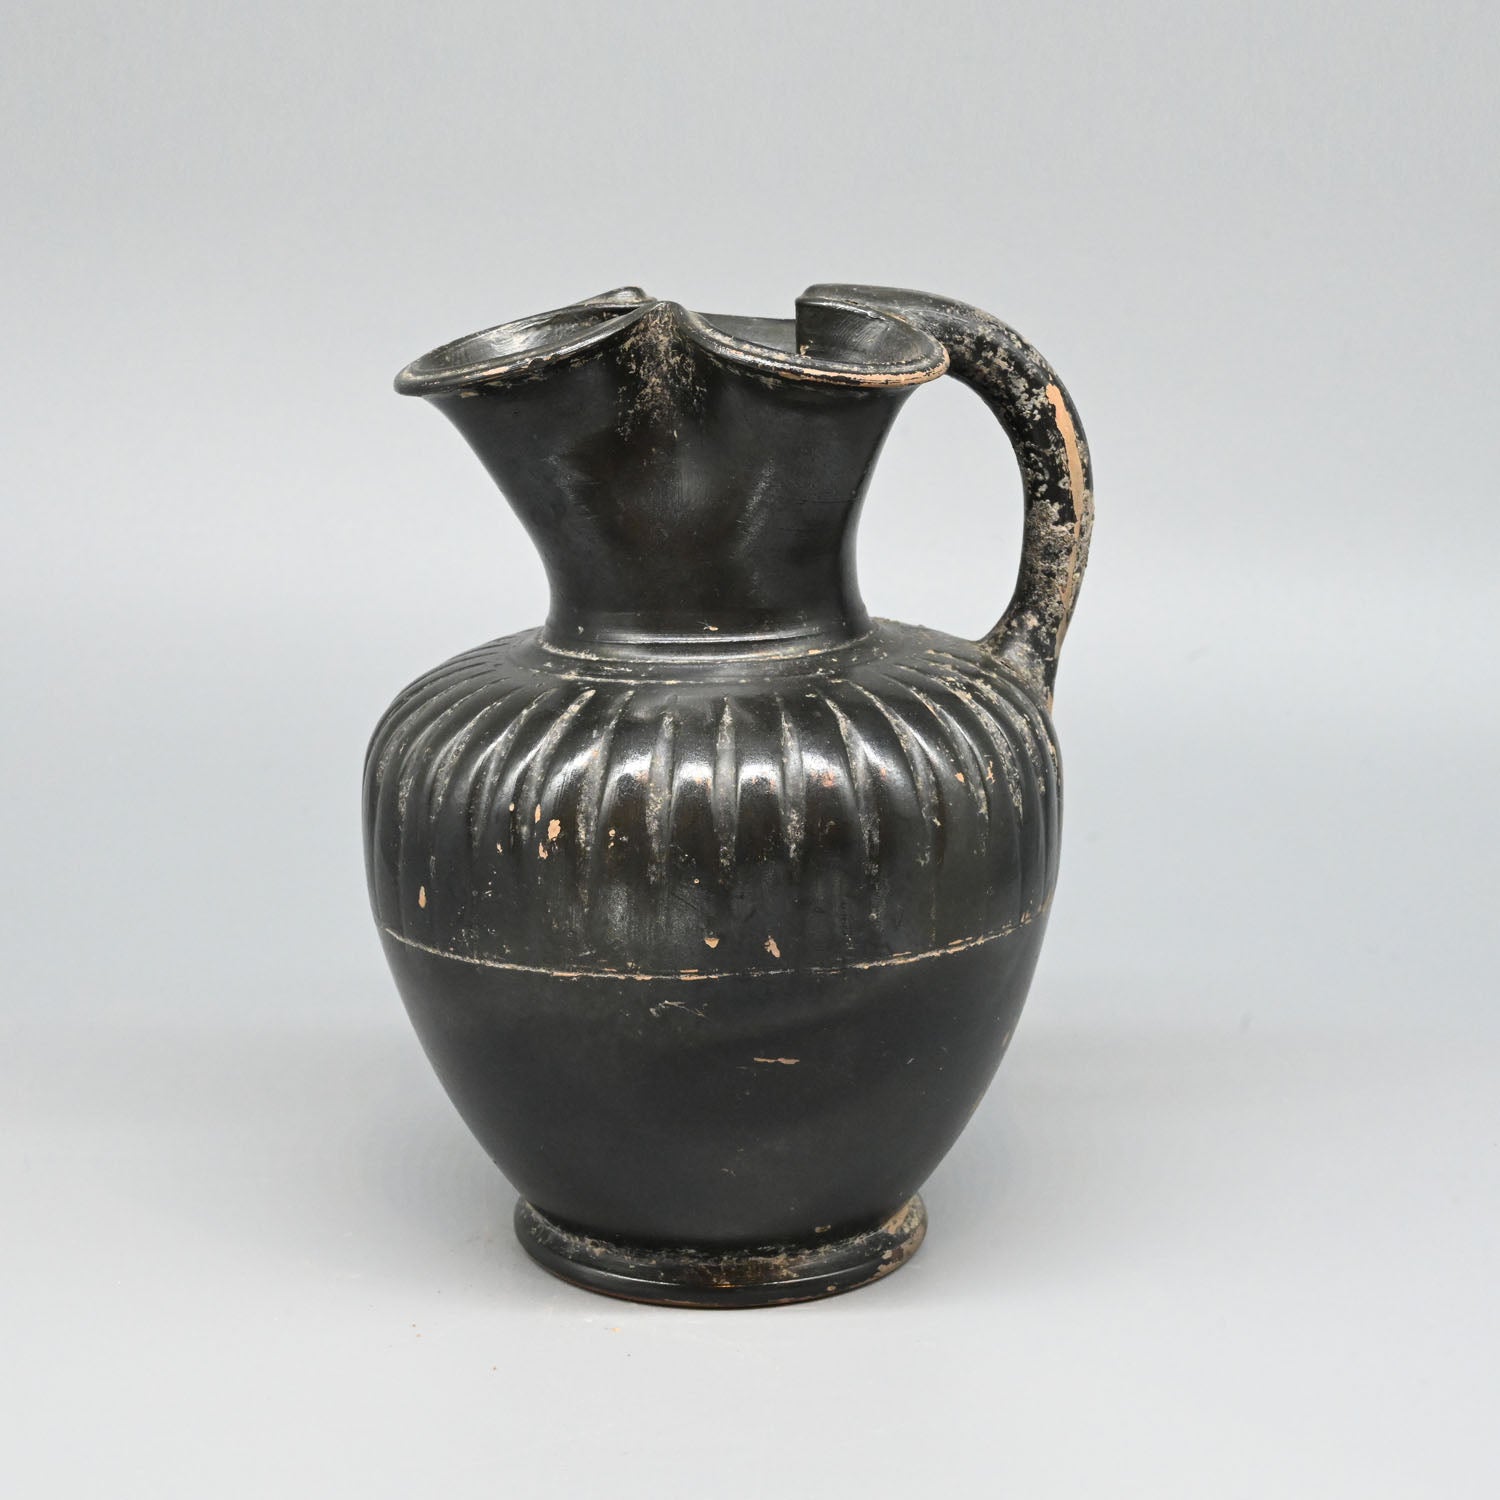 An Attic Black-Glazed Oinochoe, ca. 5th century BCE